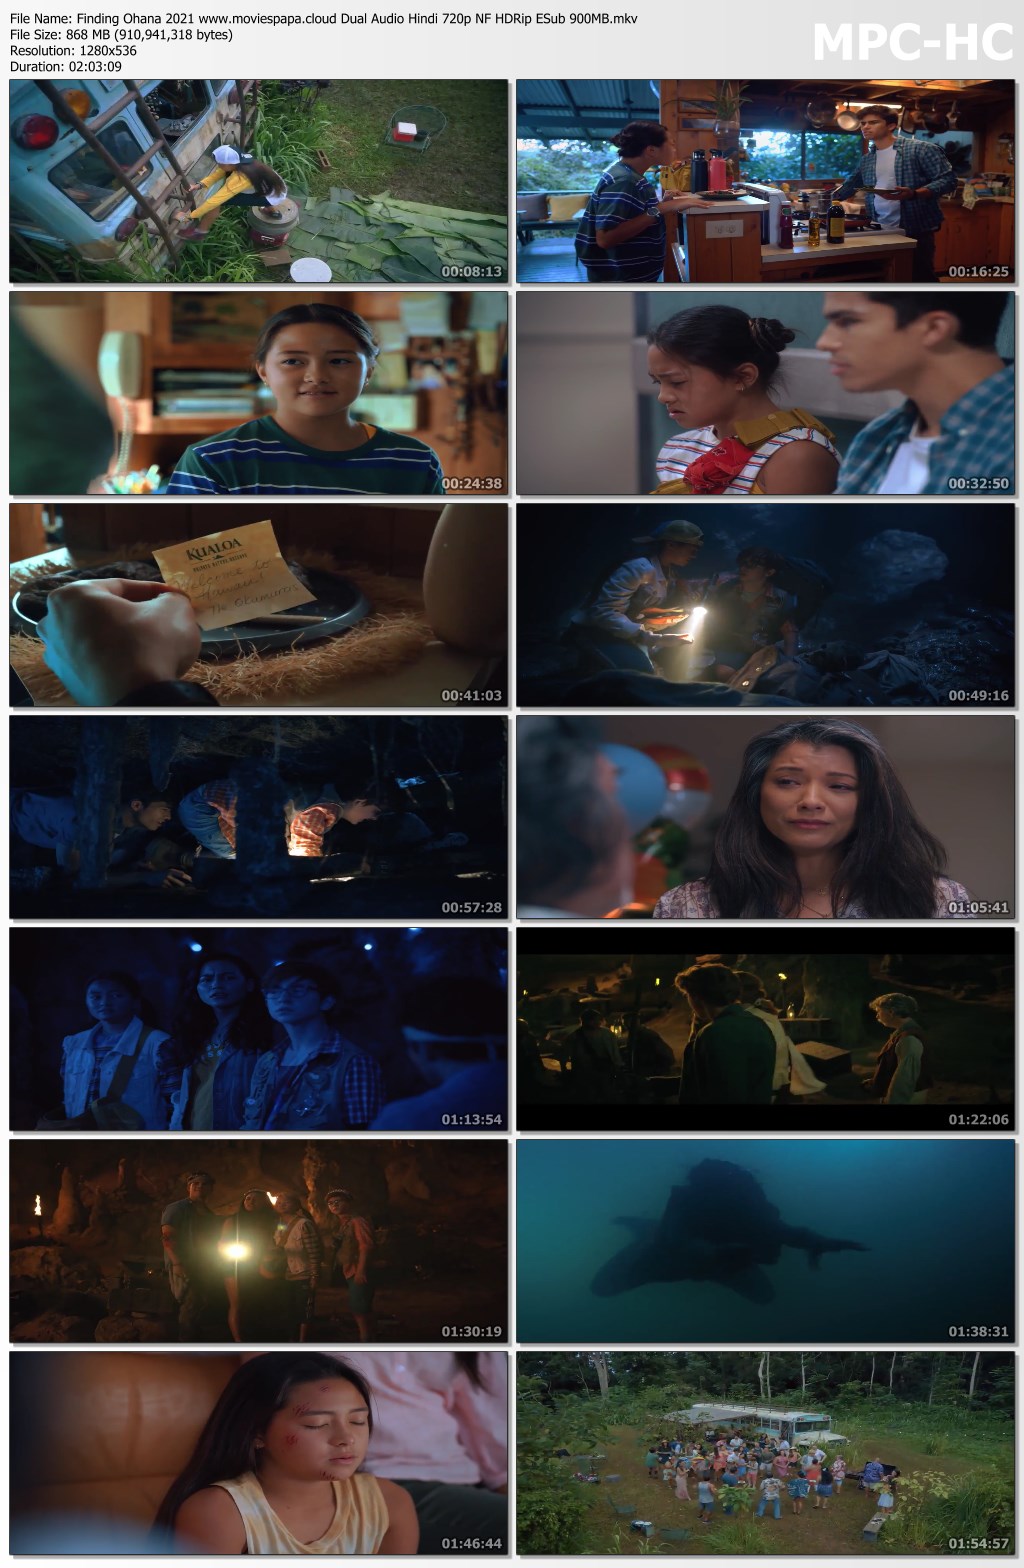 Finding Ohana (2021) Full HD Movie Free Download Hindi Dual Audio 720p